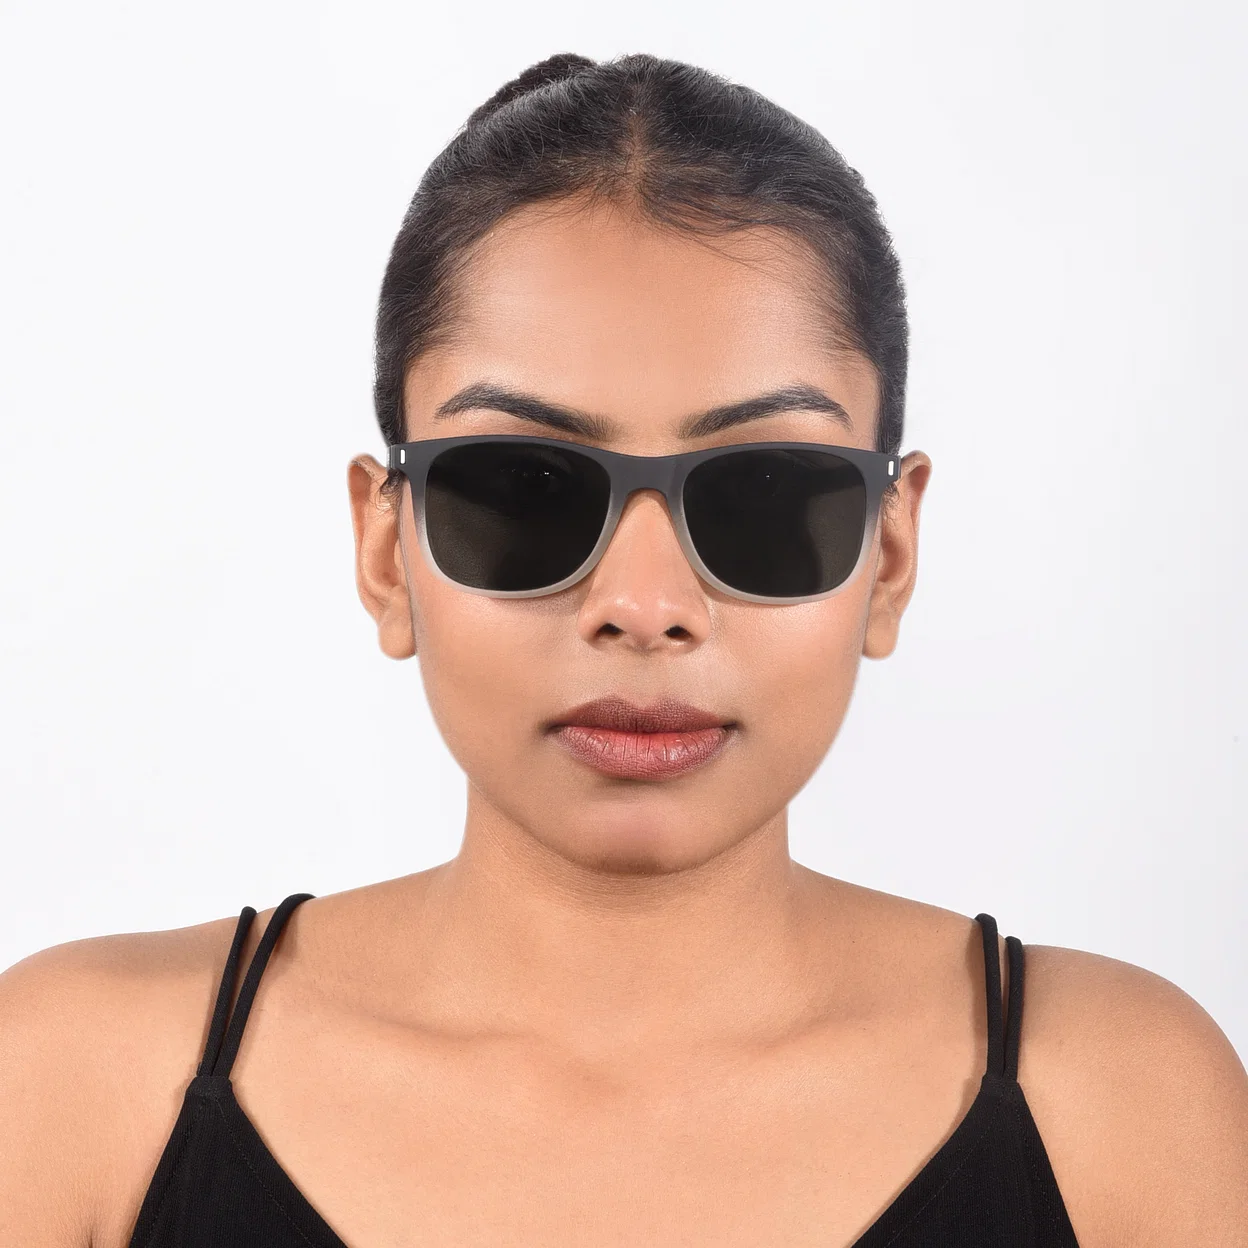 Storm Wildeye Polarized Sunglasses Seabass red / black cristal, Polarized  Glasses, Glasses, Equipment